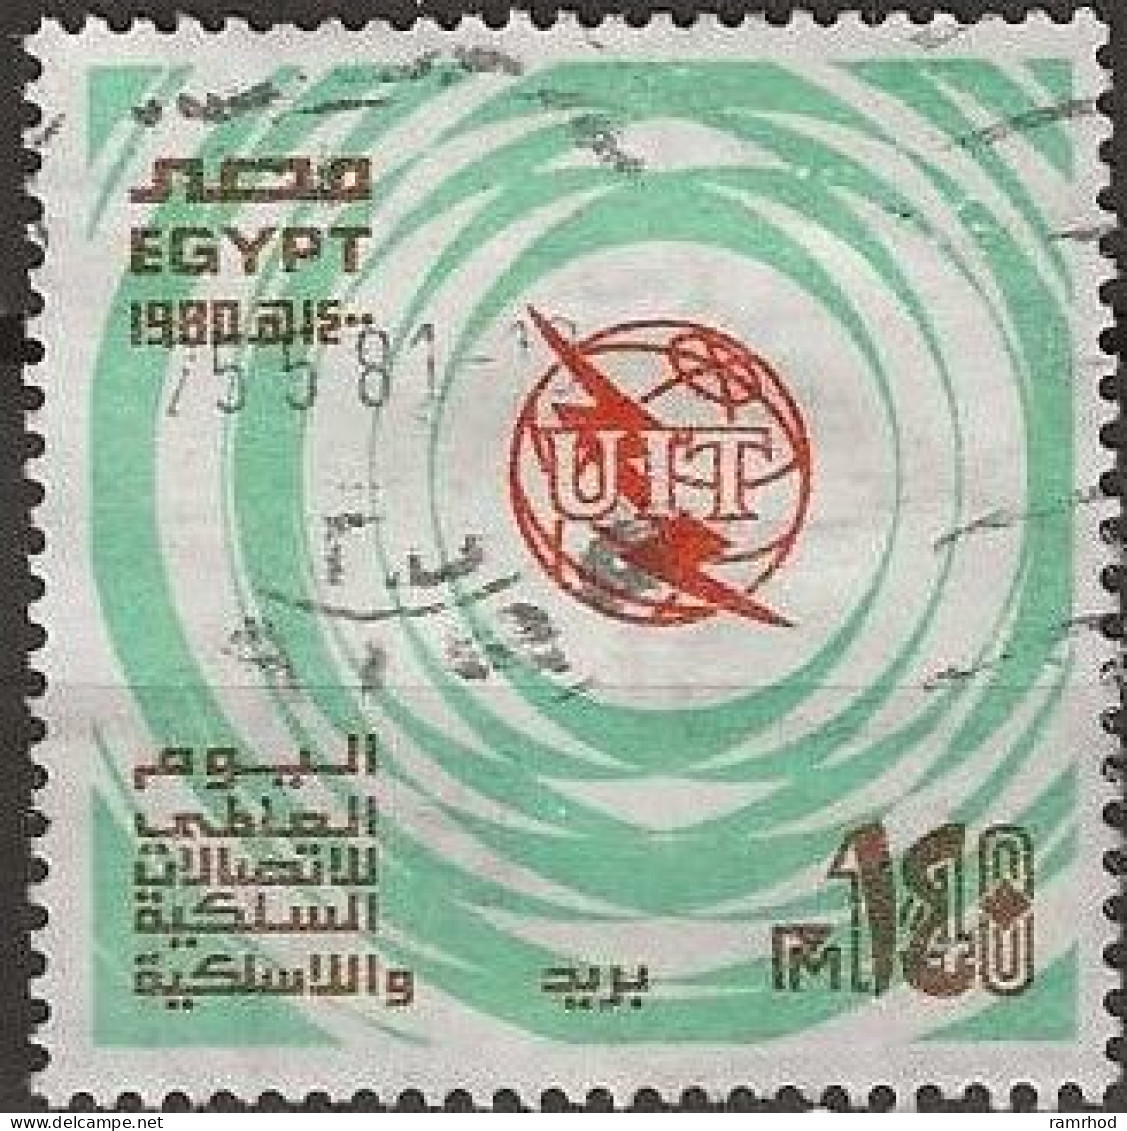 EGYPT 1980 United Nations Day - 140m. ITU Emblem (International Tele-communications Day) FU - Usati